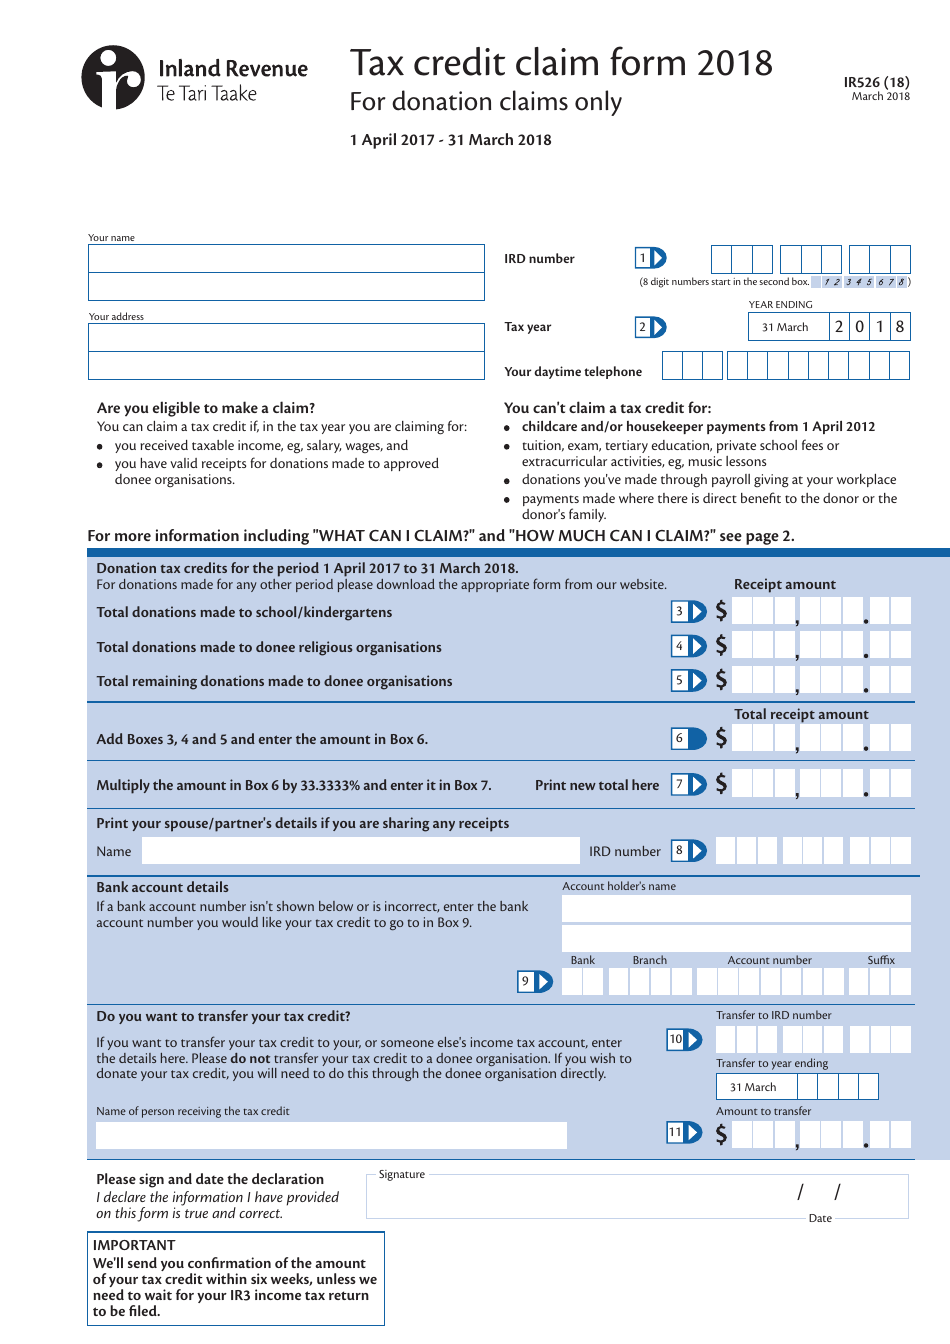 Form IR526 Tax Credit Claim Form - New Zealand, Page 1